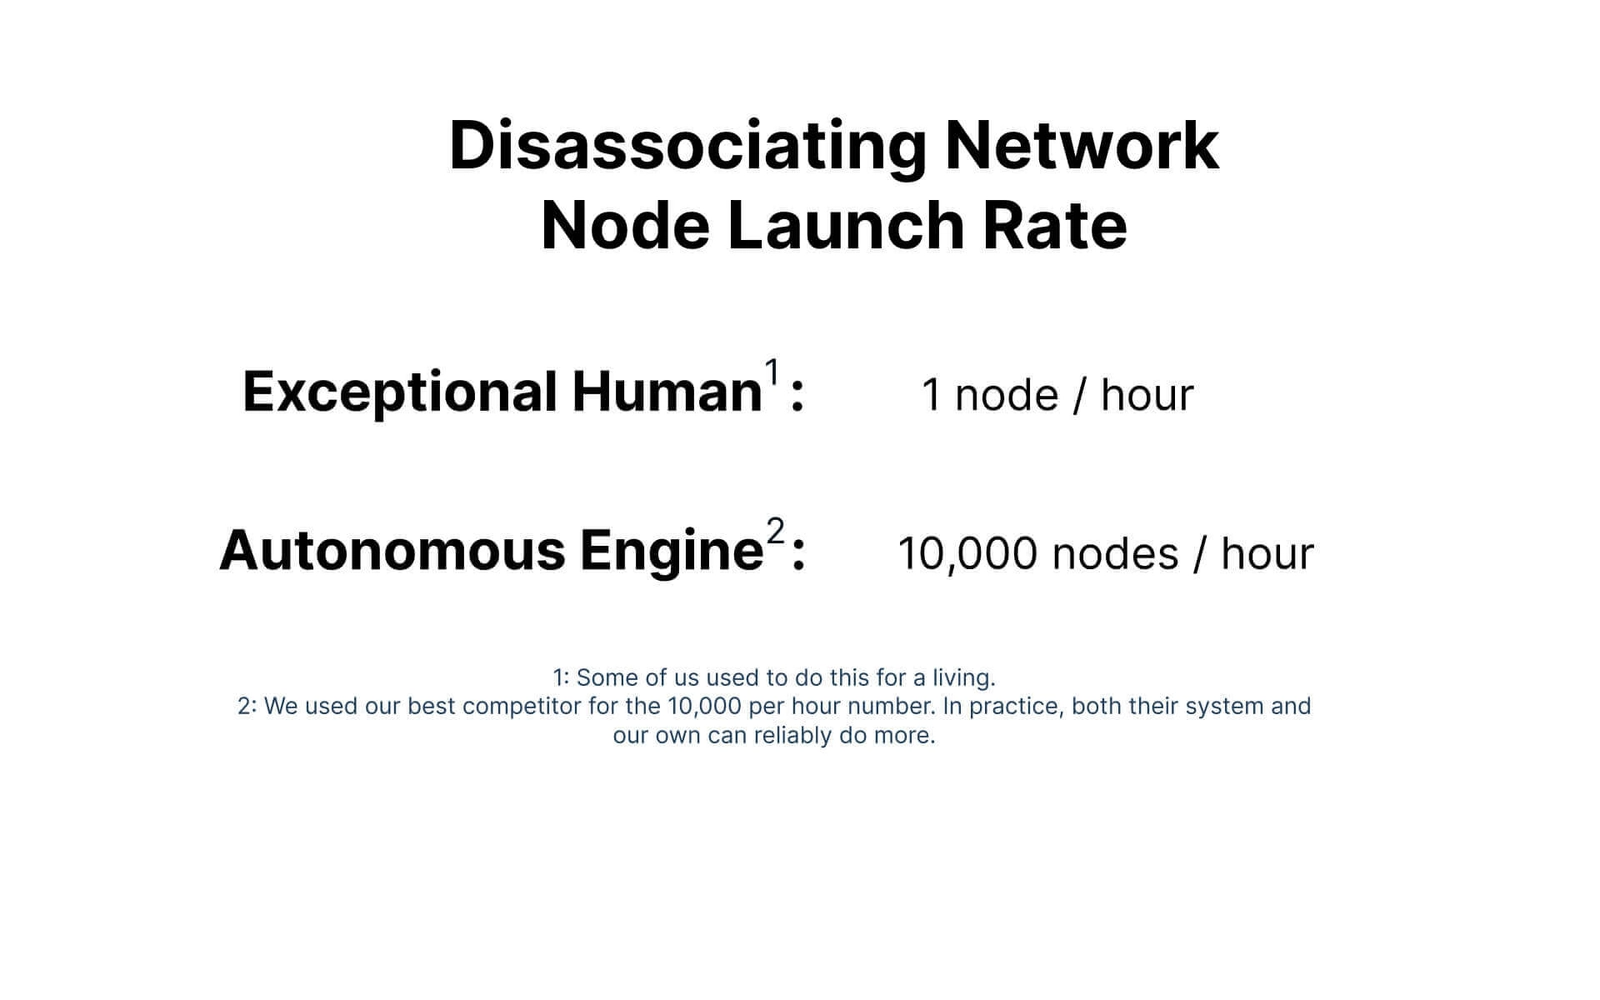 Image comparing low-attribution node launch rates per hour: An exceptional human can launch 1 node per hour, whereas an Autonomous Engine can launch 10,000 nodes per hour.